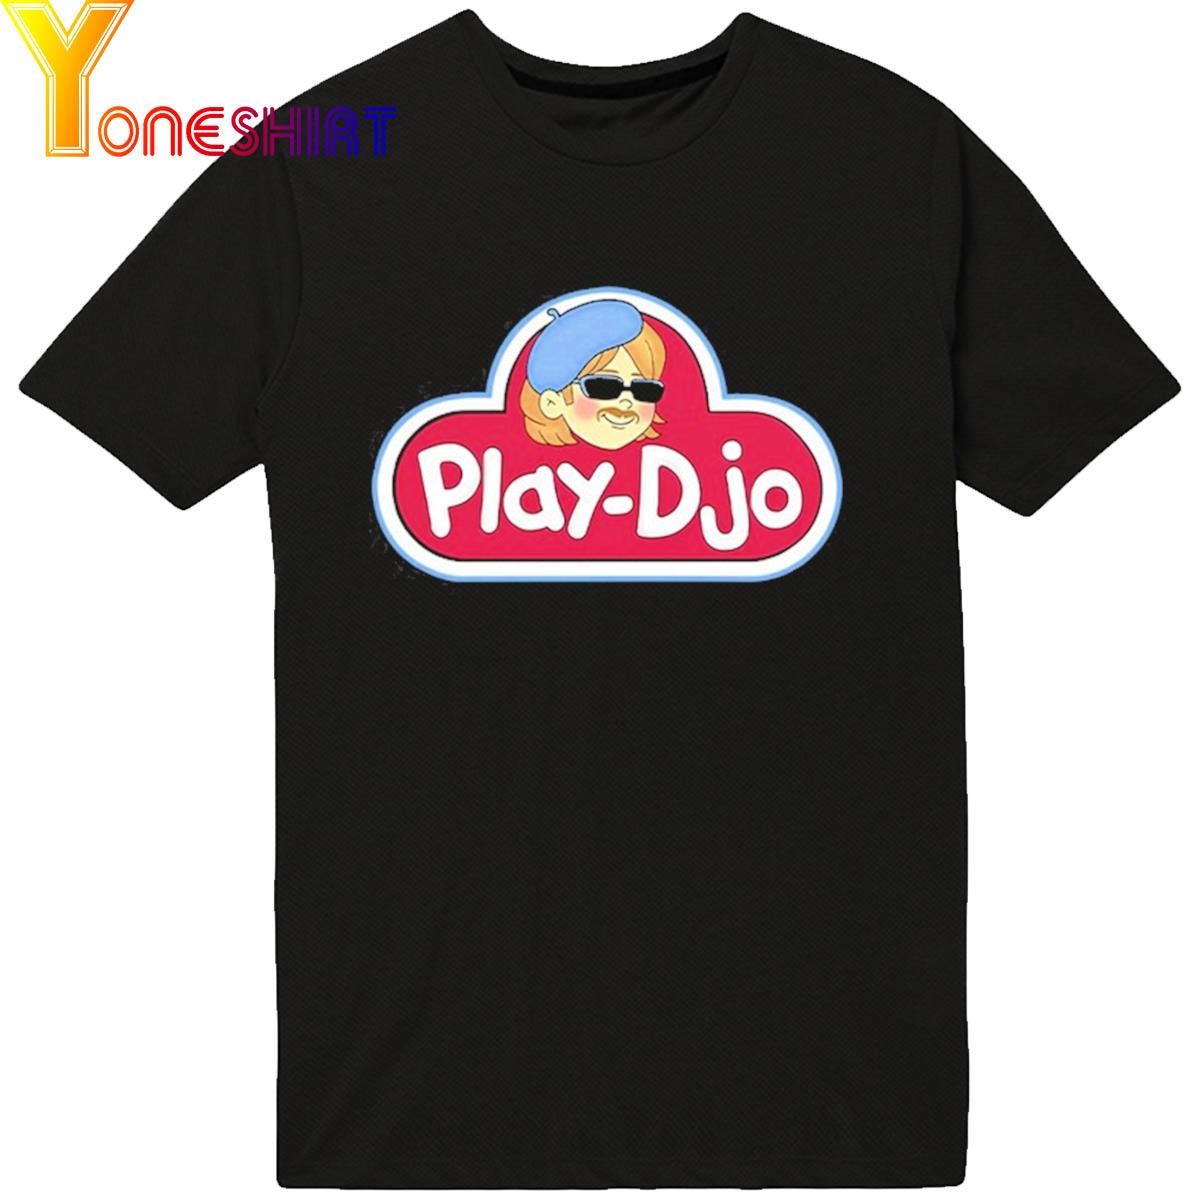 Djomusic Play Djo Ringer shirt